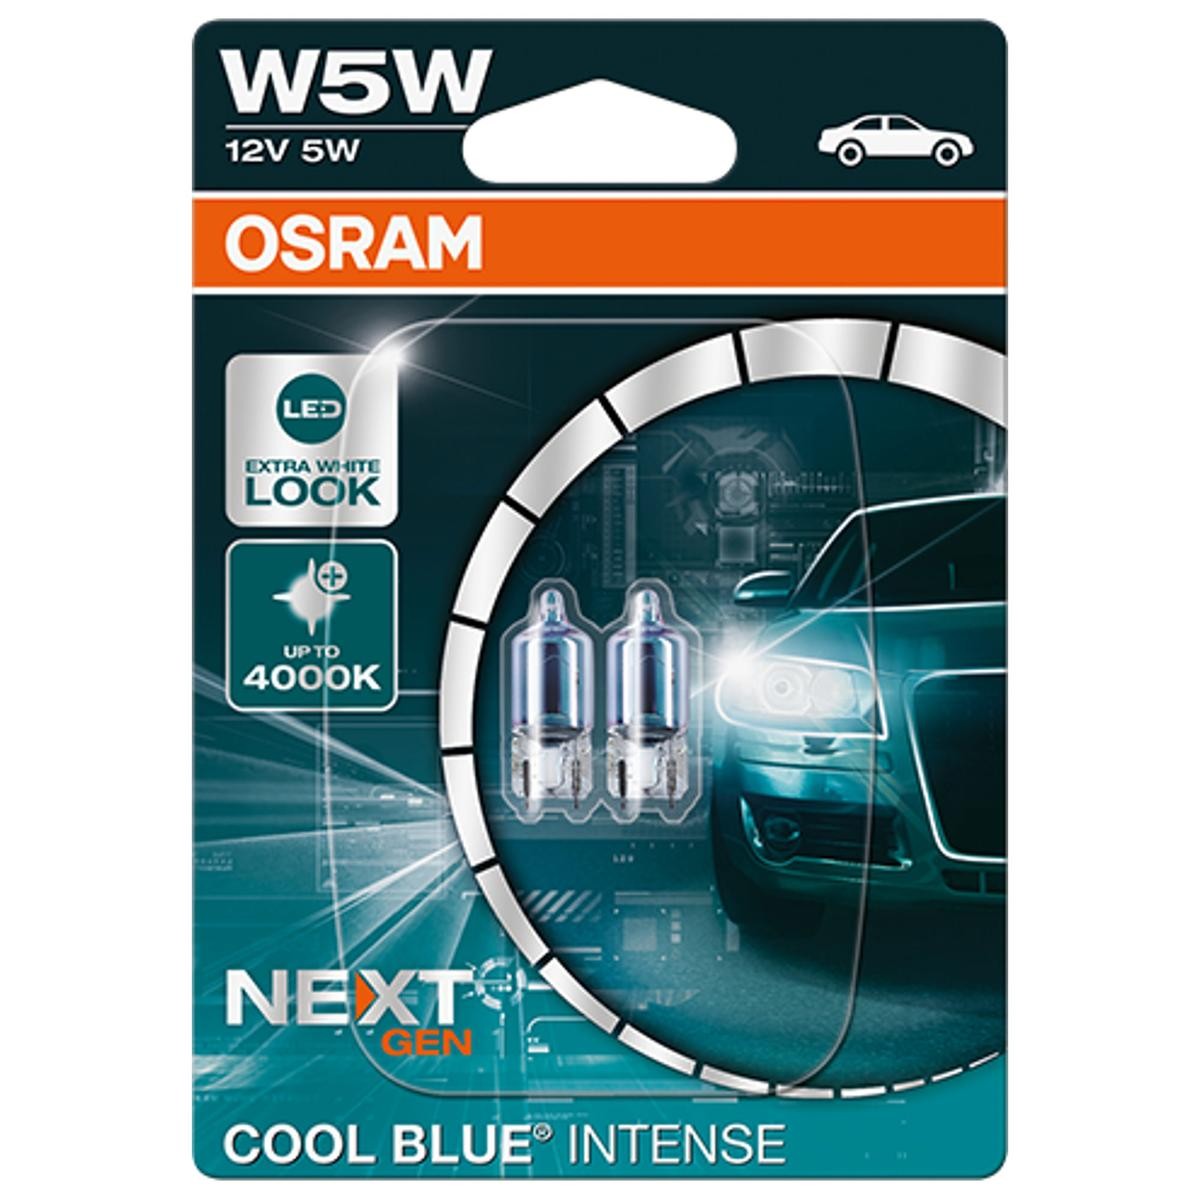 VESPA S Blinkerbirne 12V 5W, W5W OSRAM COOL BLUE INTENSE next Generation 2825CBN-02B